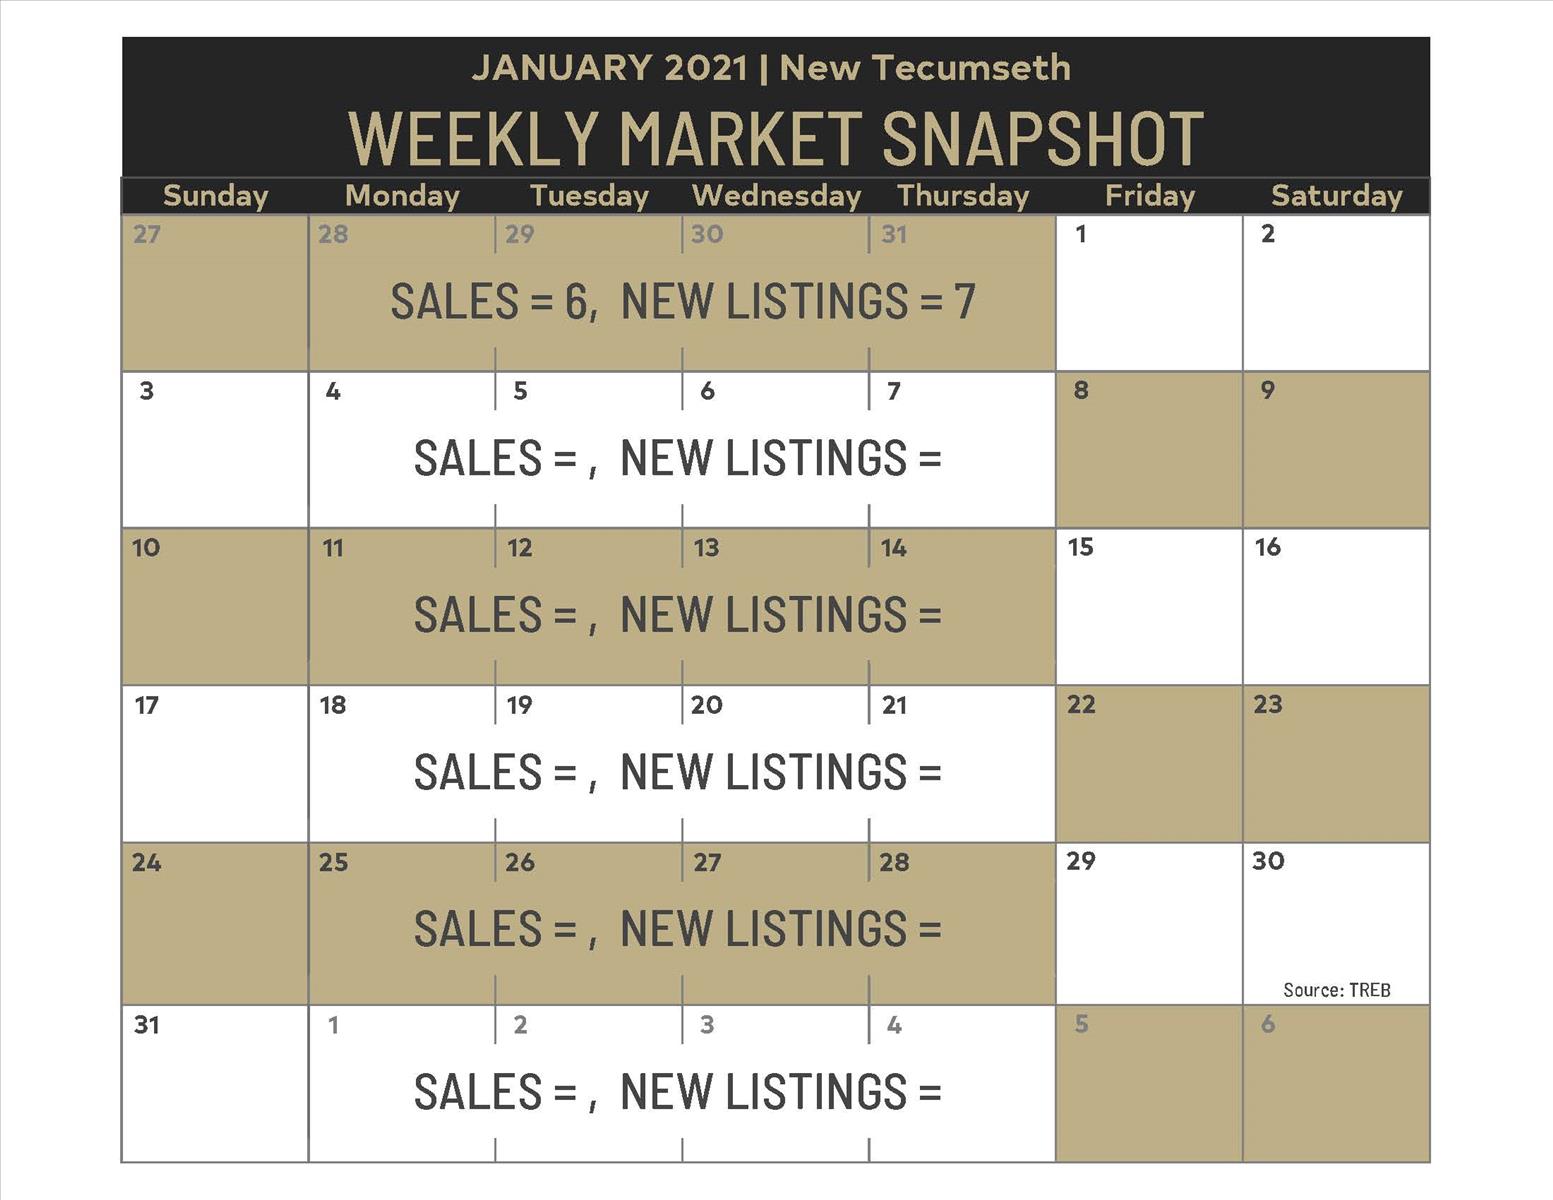 Weekly Market Snapshot: January 2021